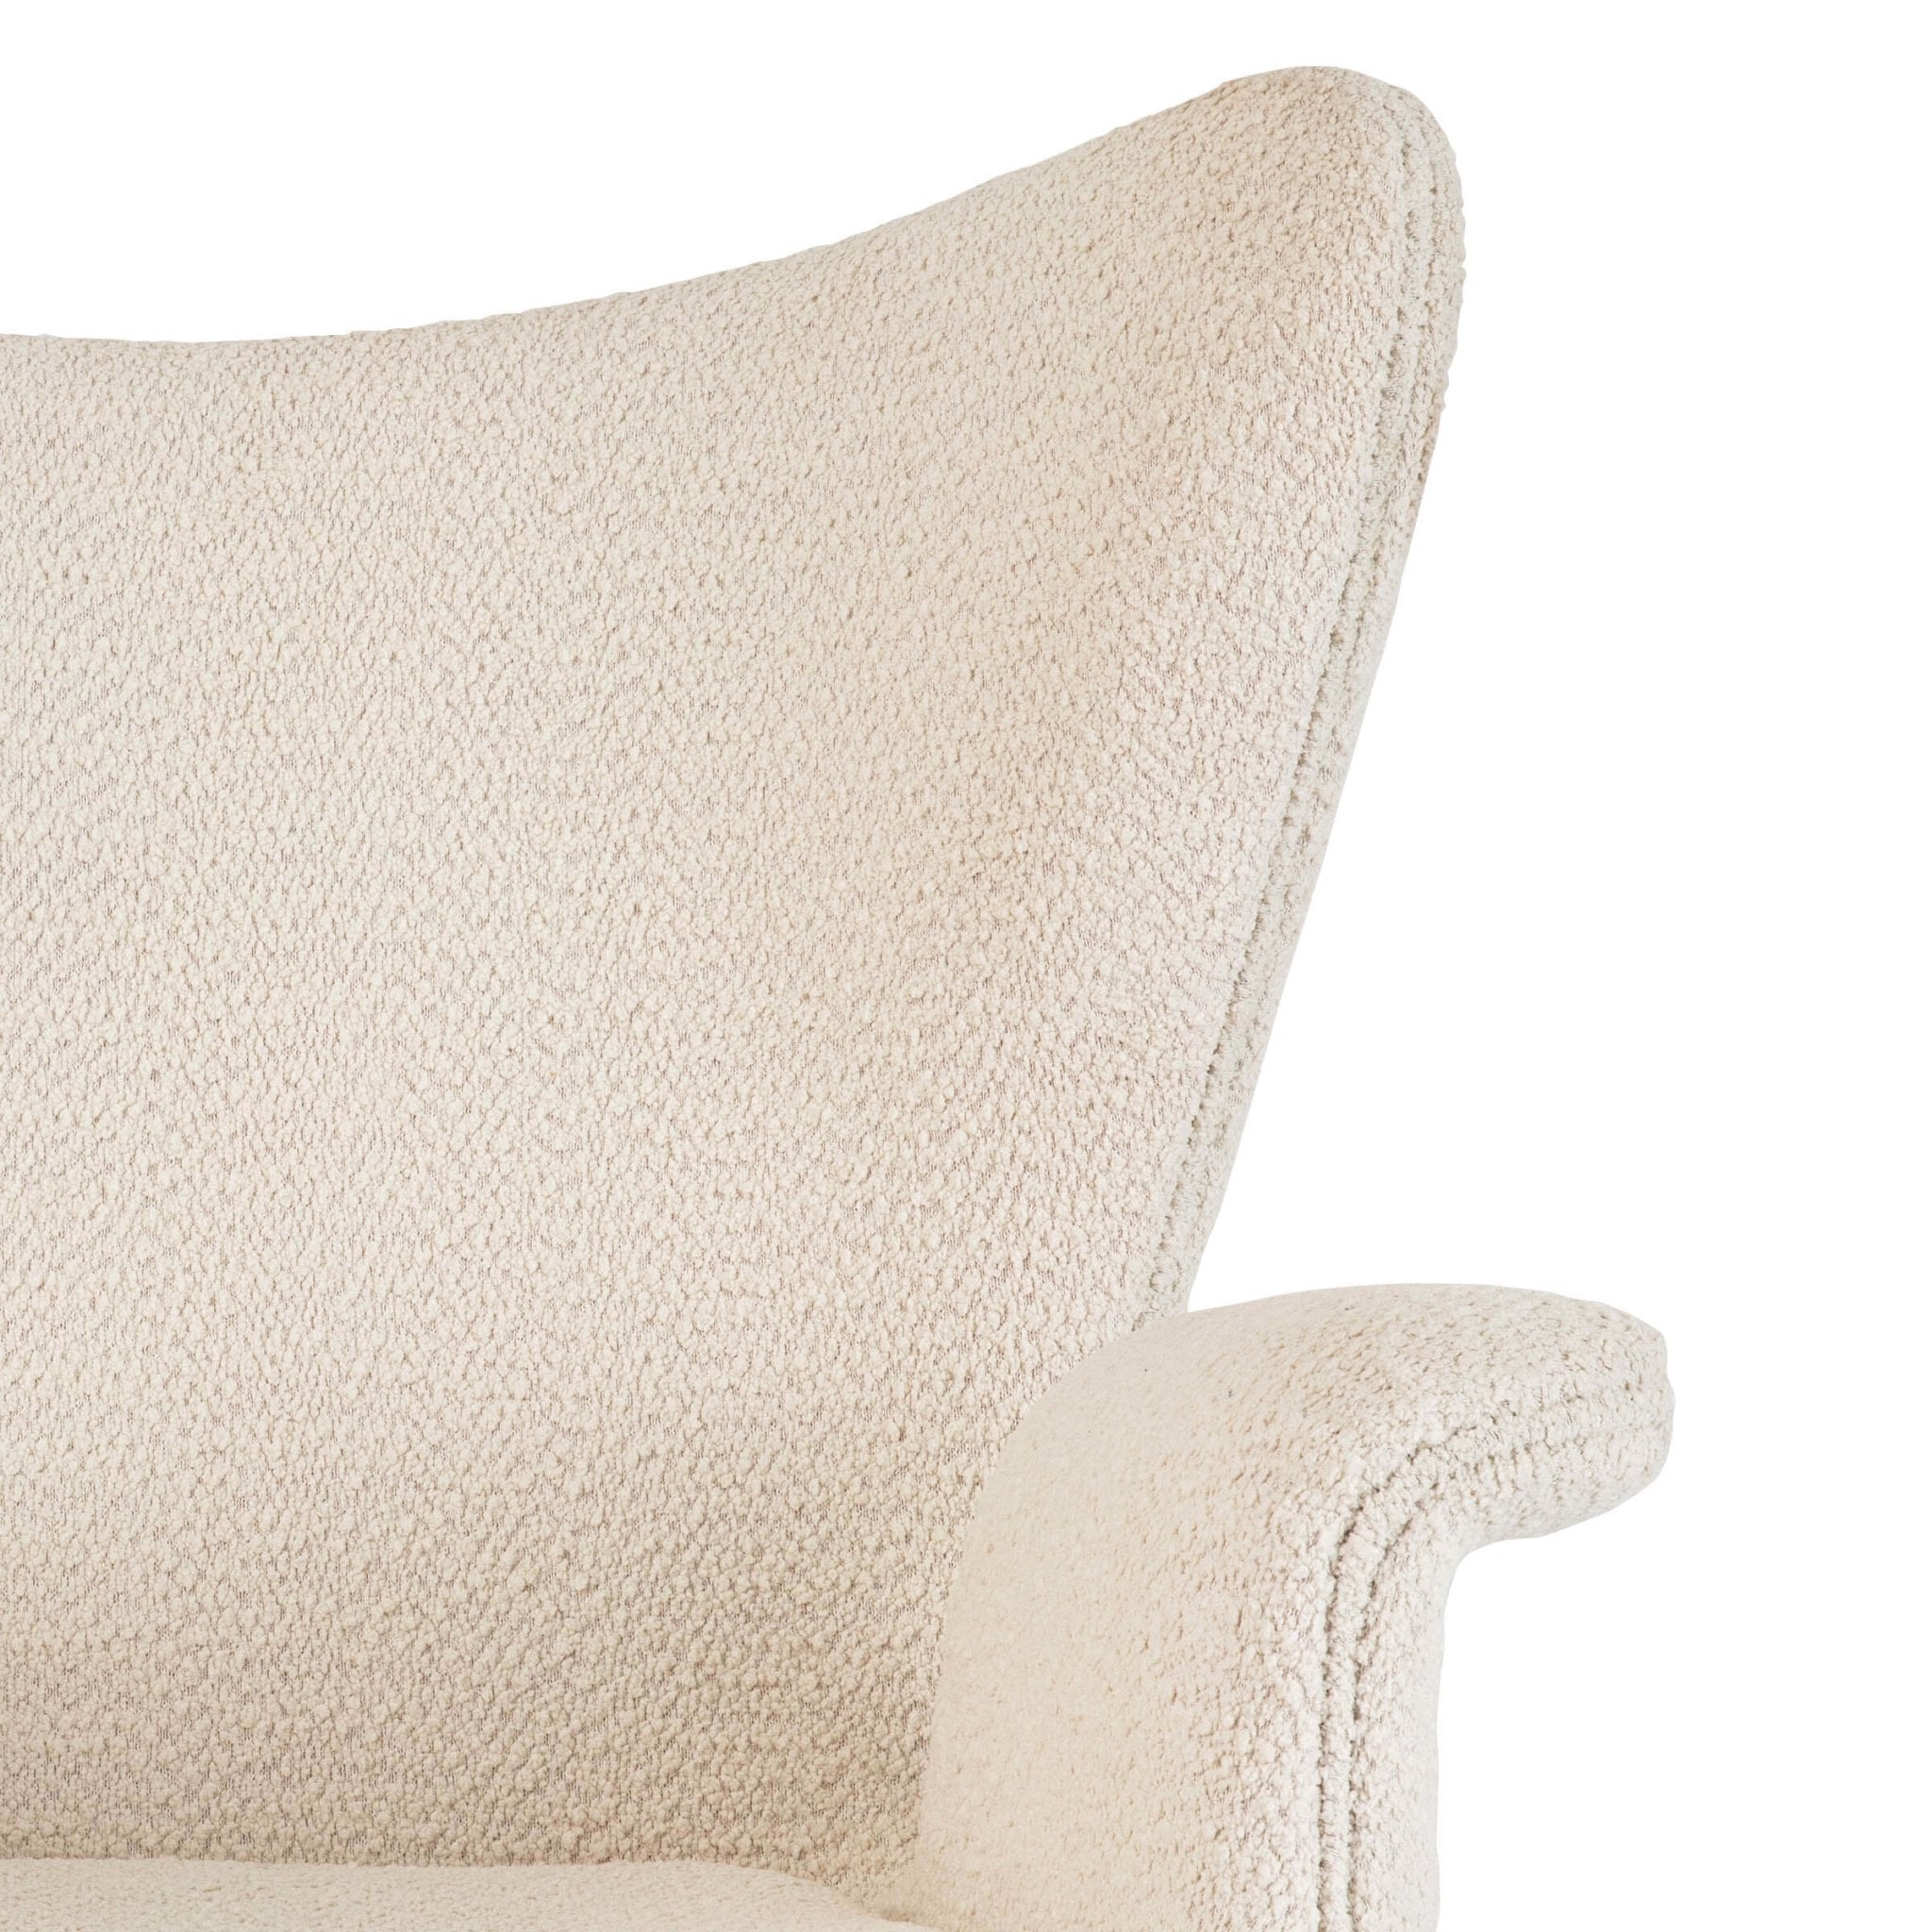 Geneva Chair - Furniture - Tipplergoods